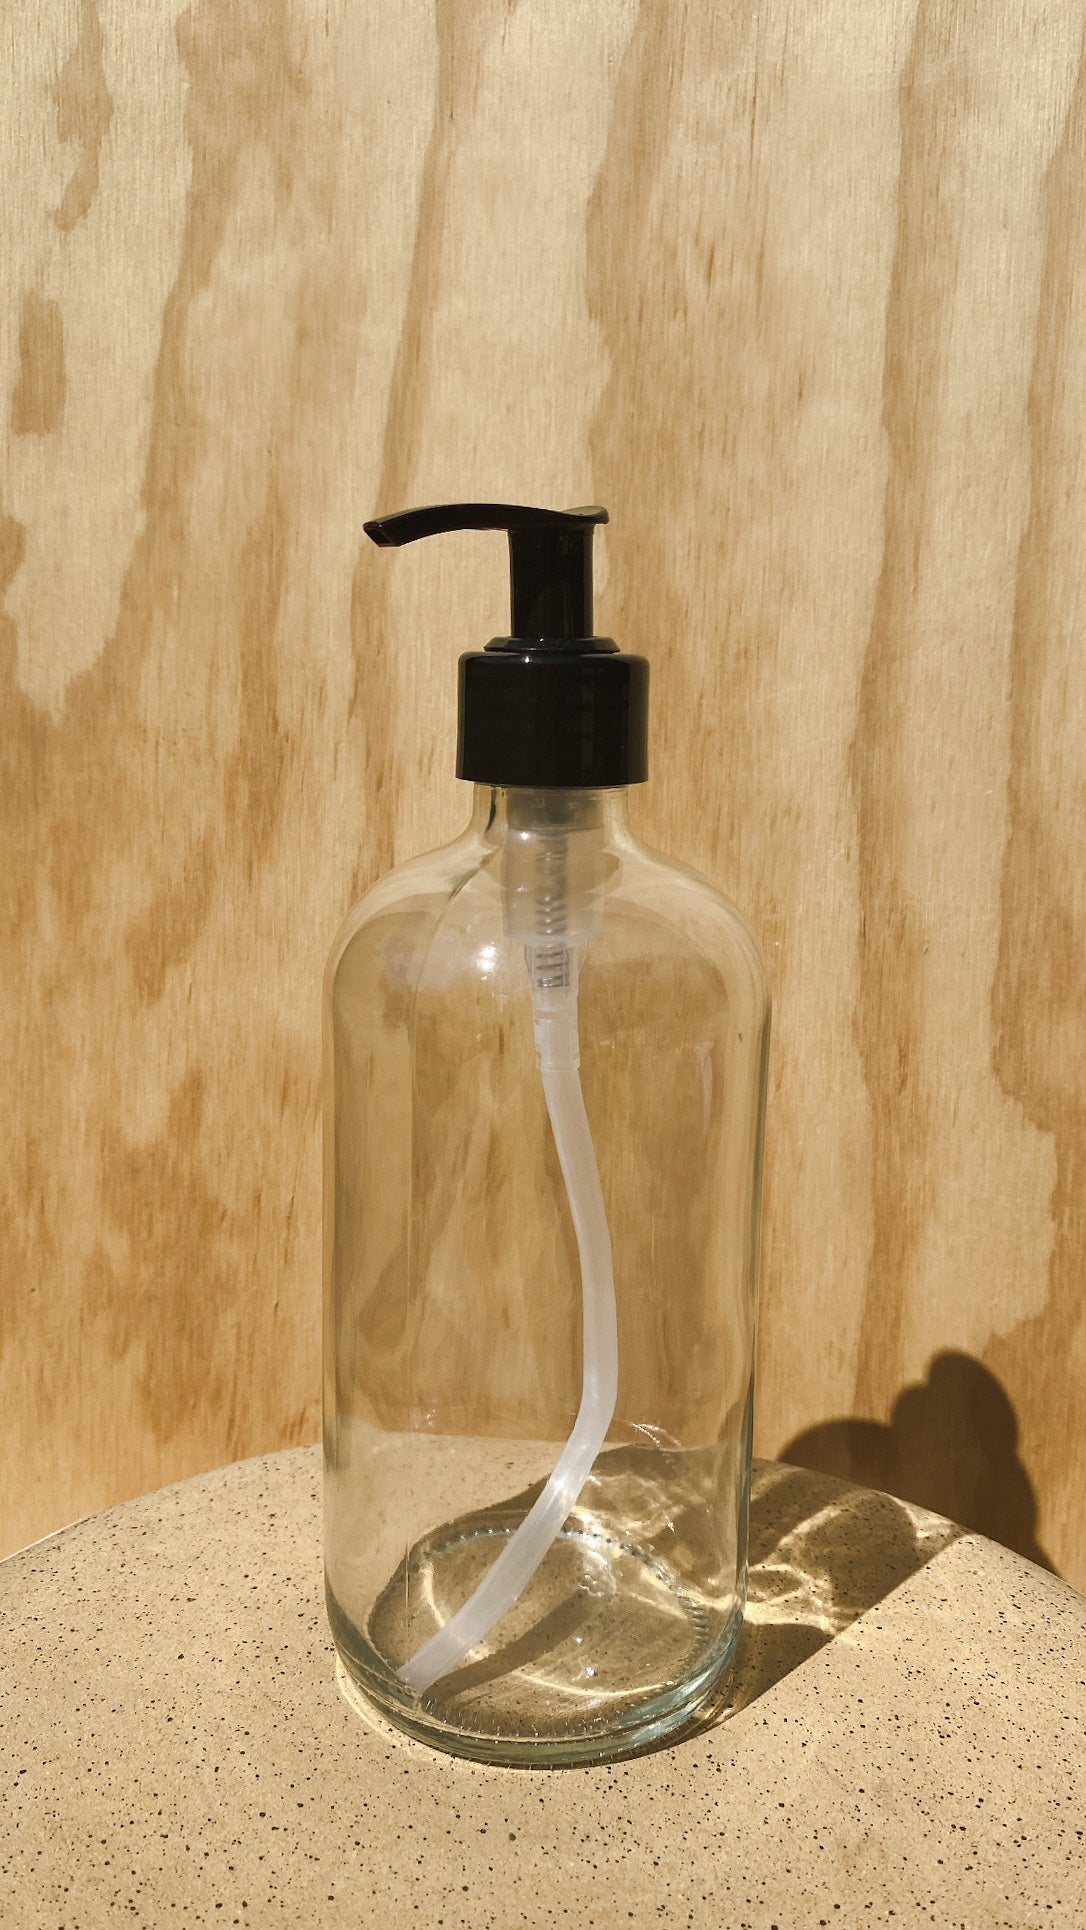 Shower Gel + Hand Soap | Cedar + Sage by Oneka